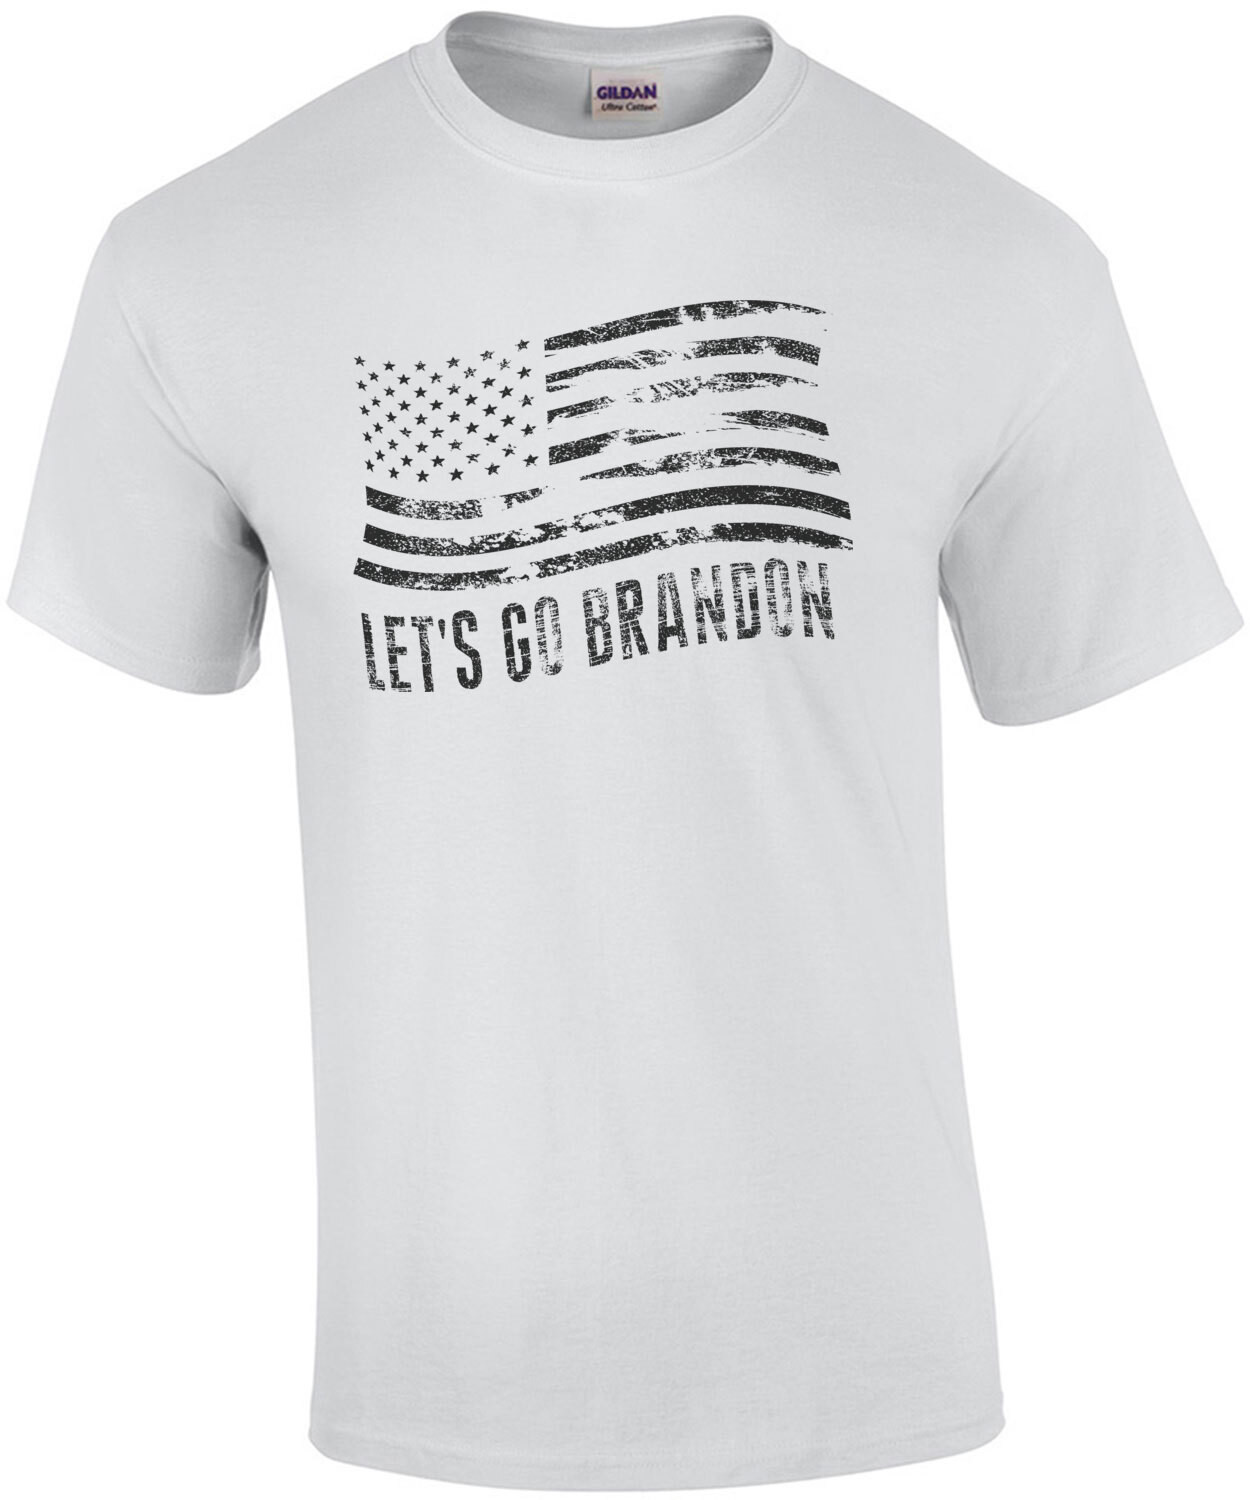 Let's Go Brandon - Anti Joe Biden T-Shirt